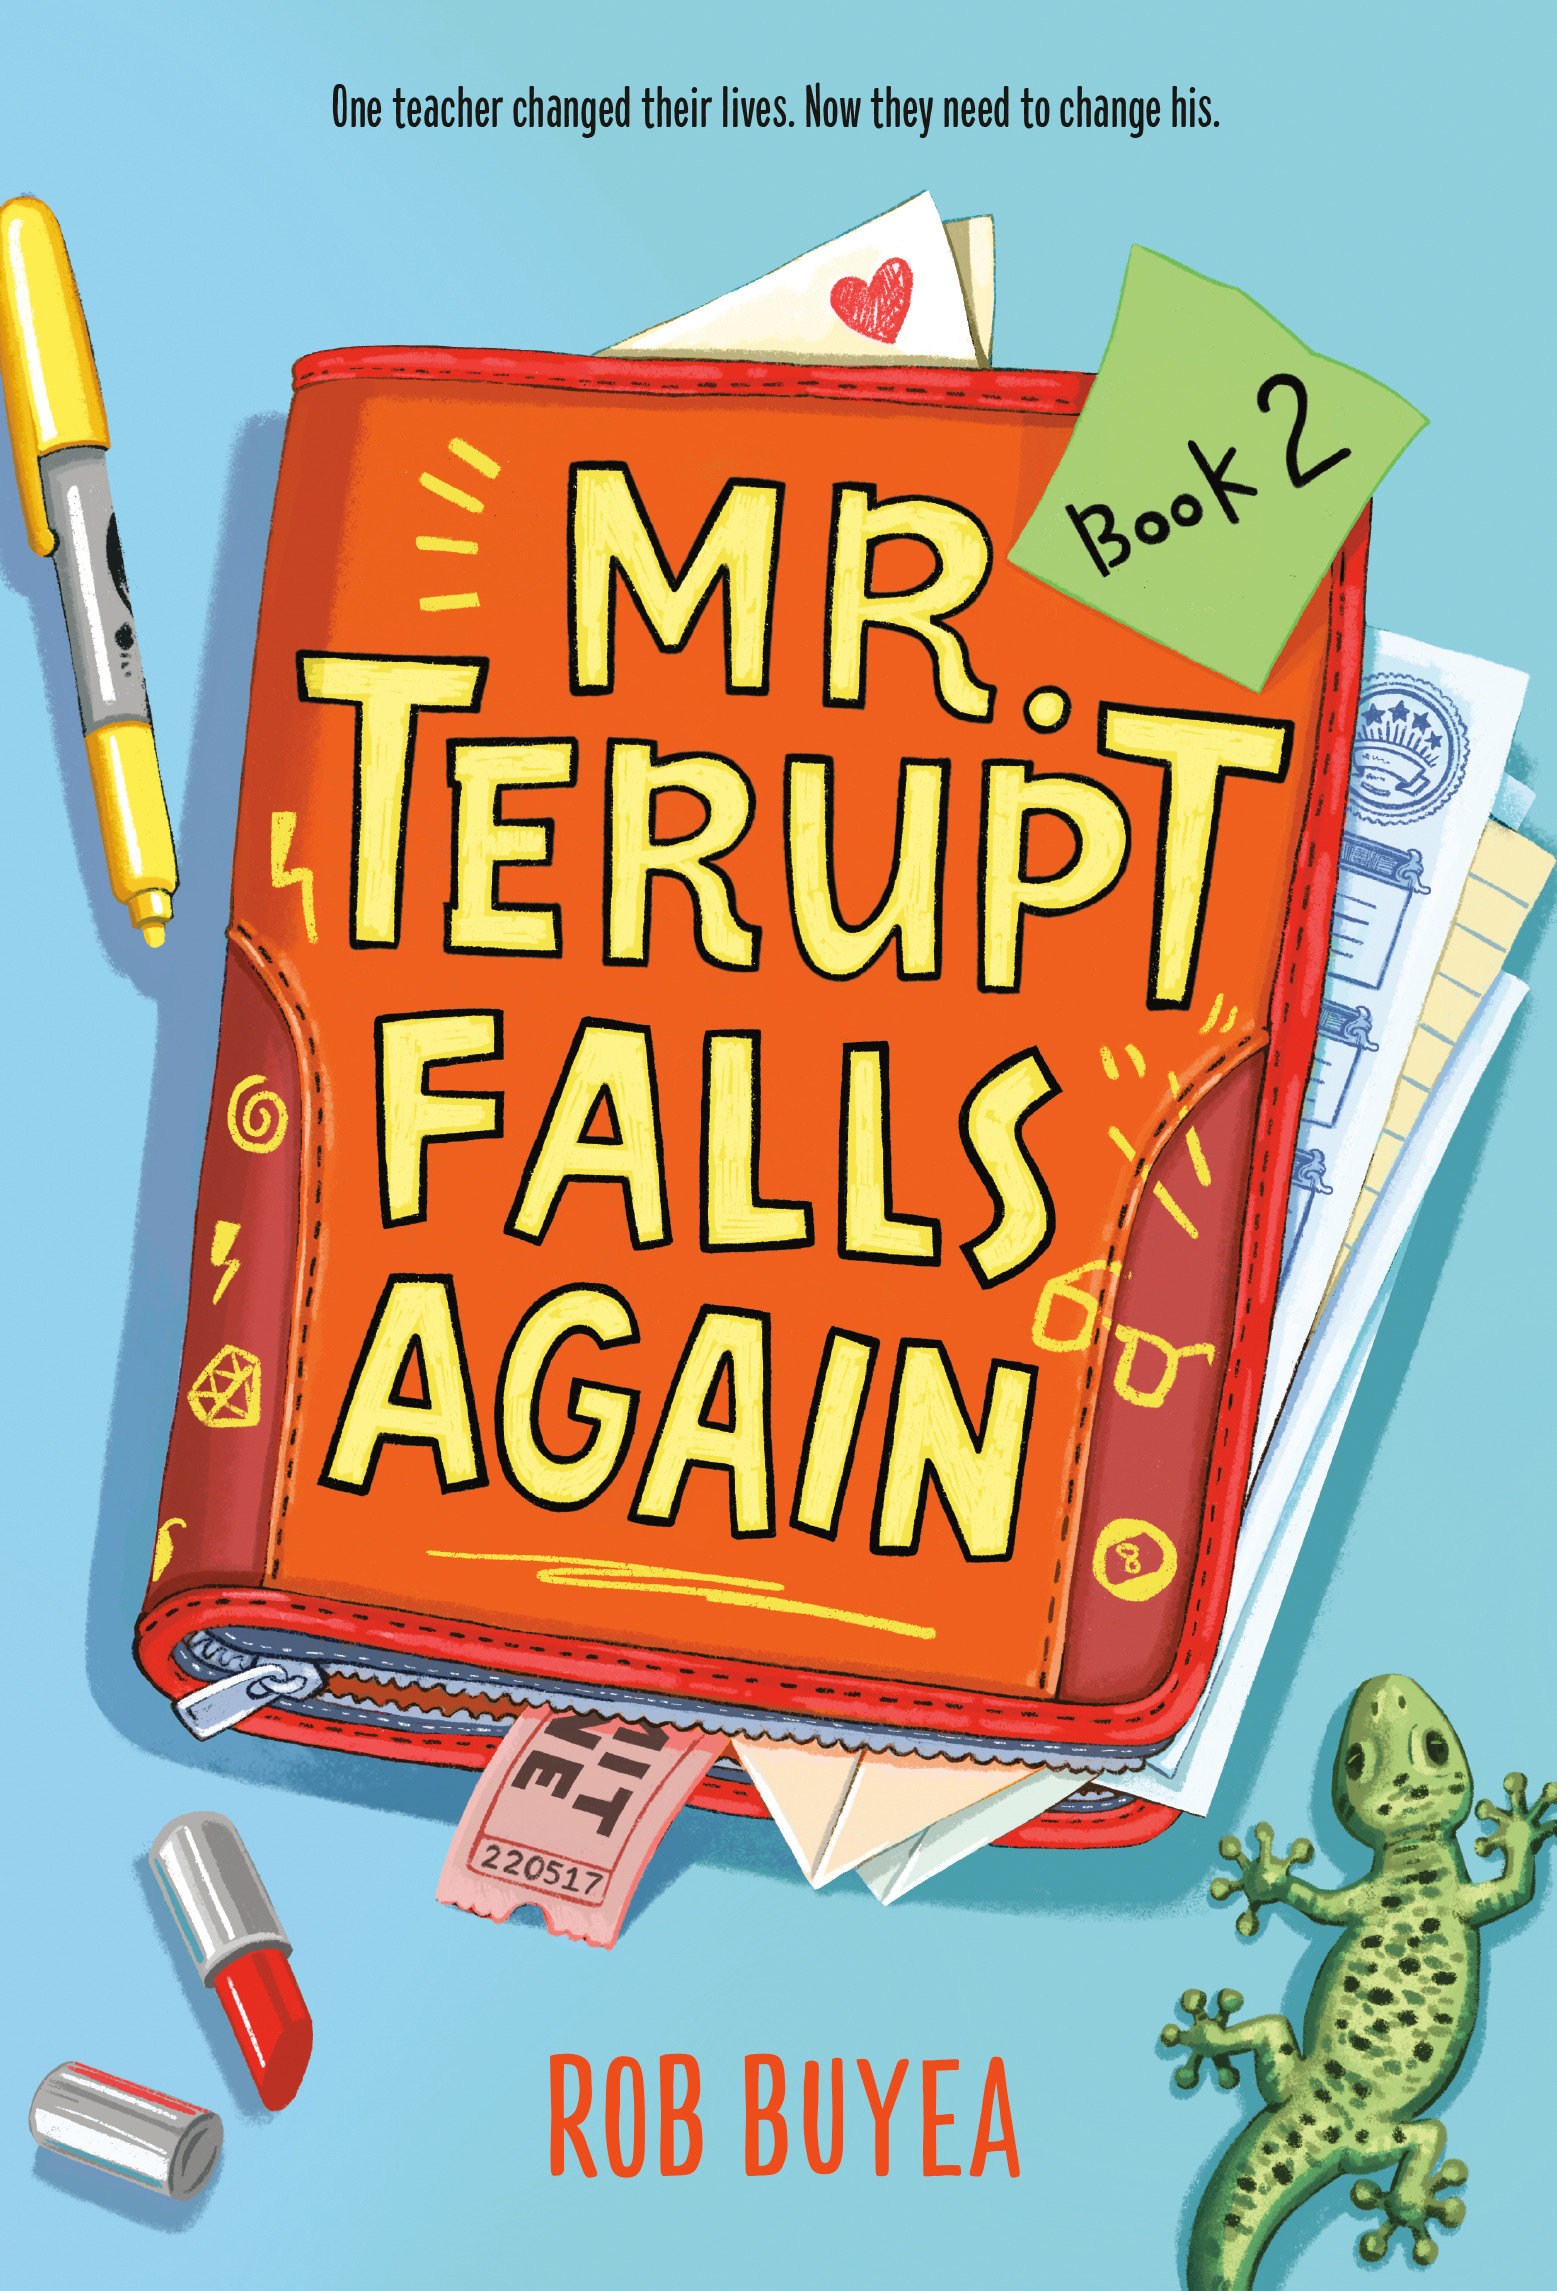 Mr. Terupt falls again cover image